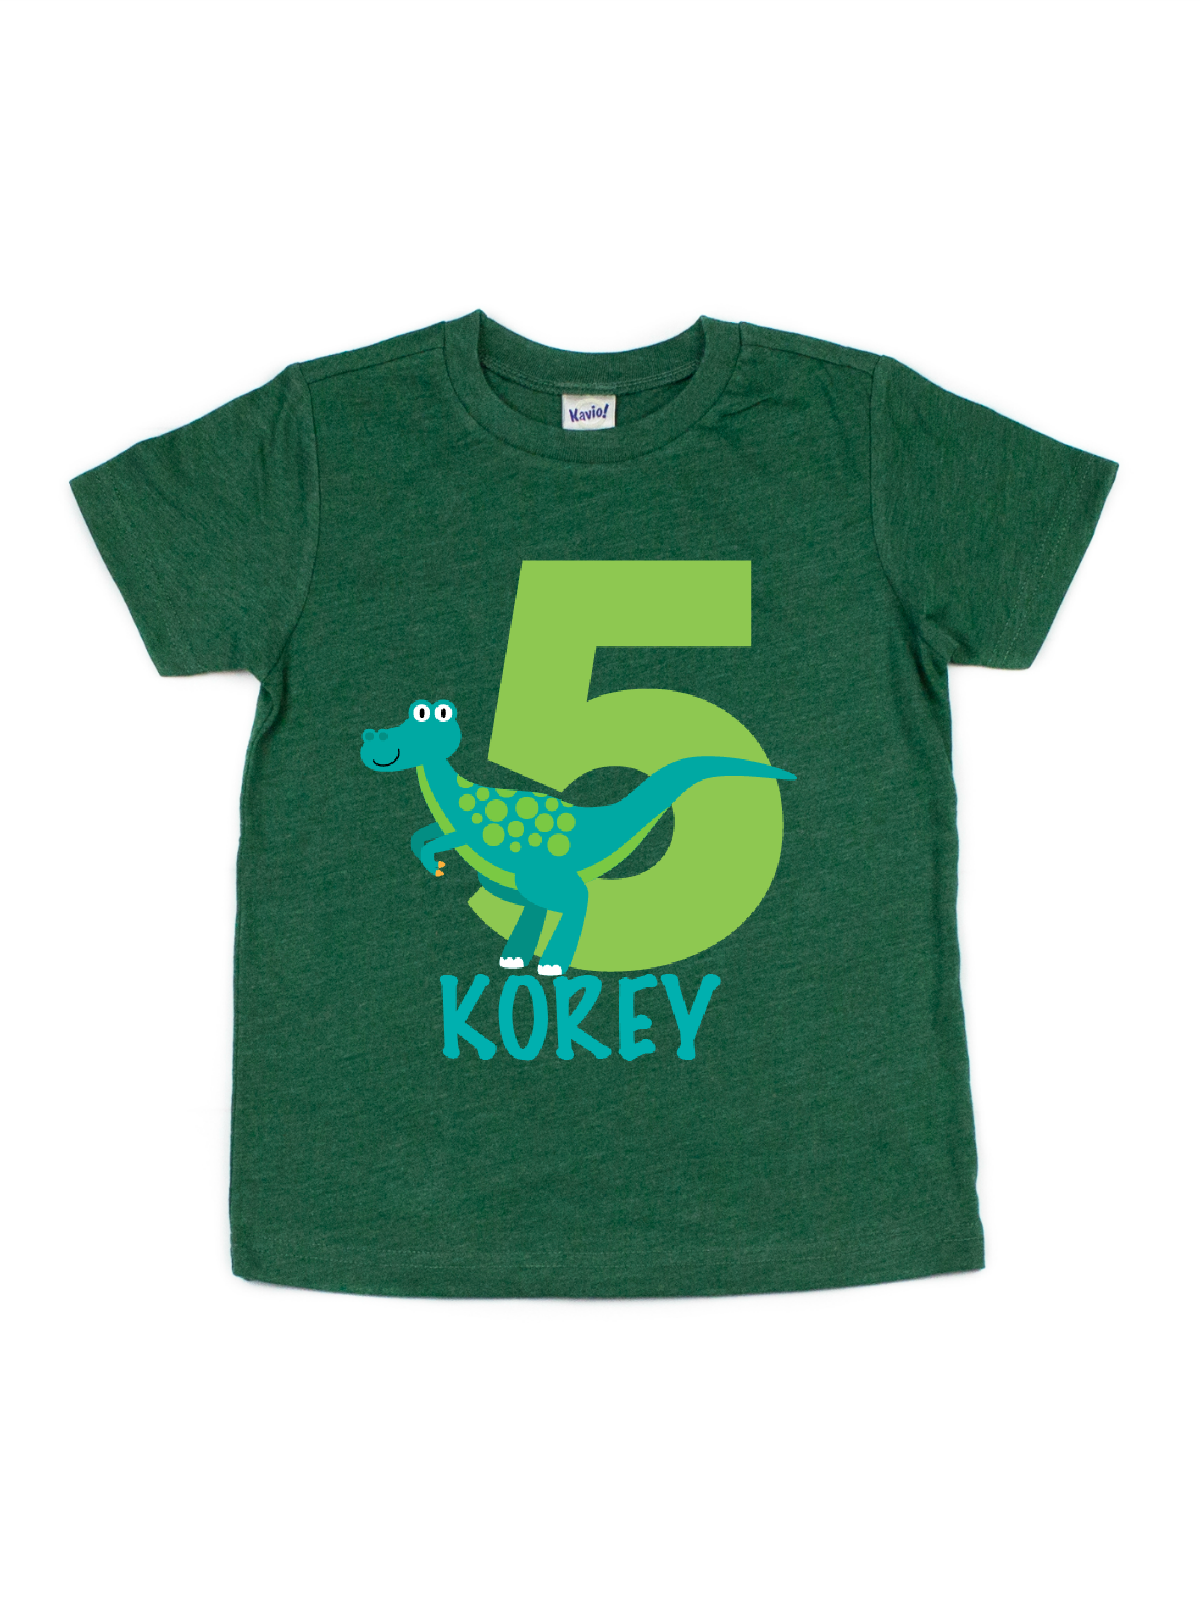 green dinosaur birthday shirt for boys